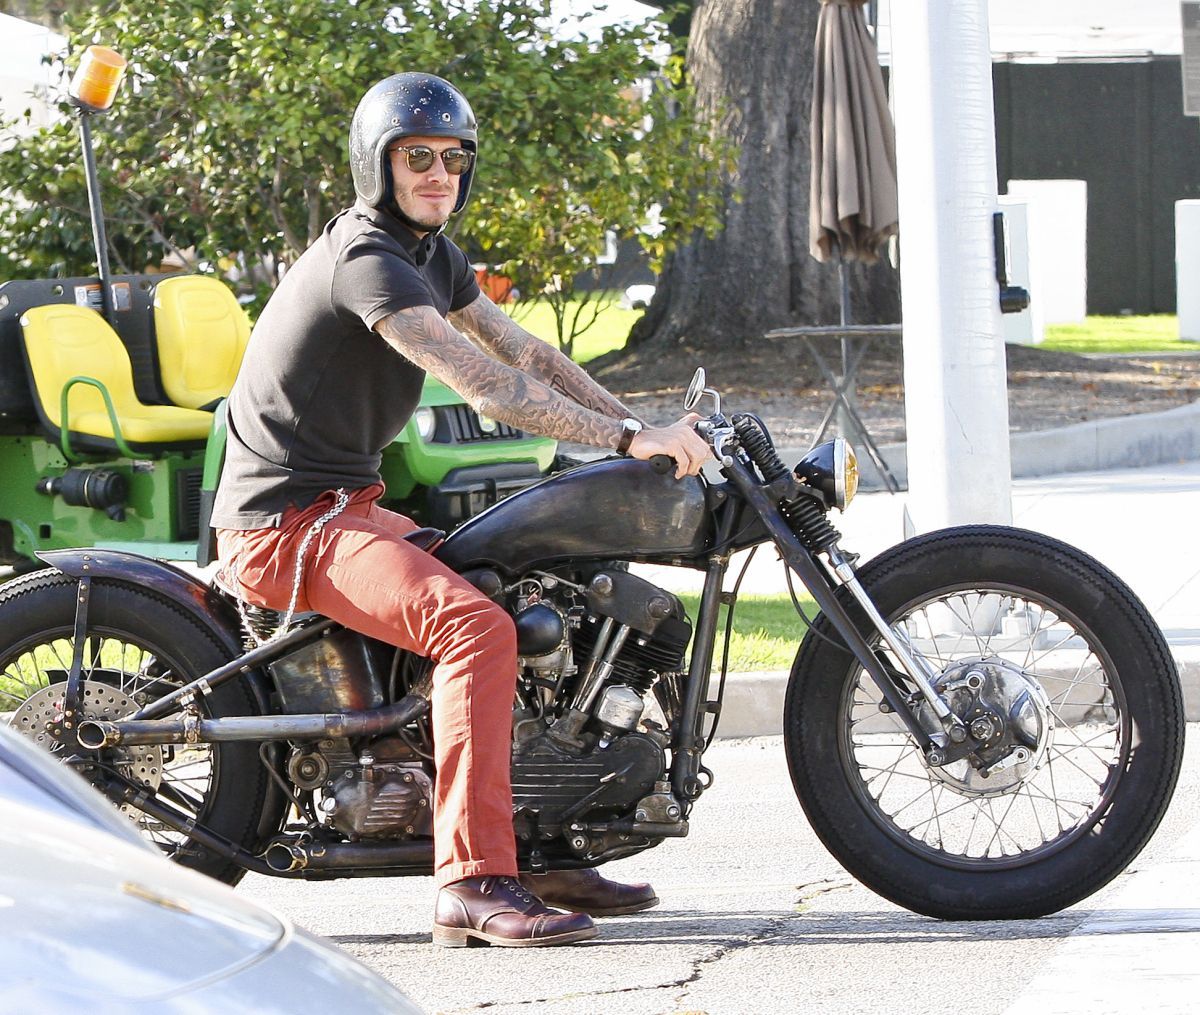 David Beckham on a motorcycle